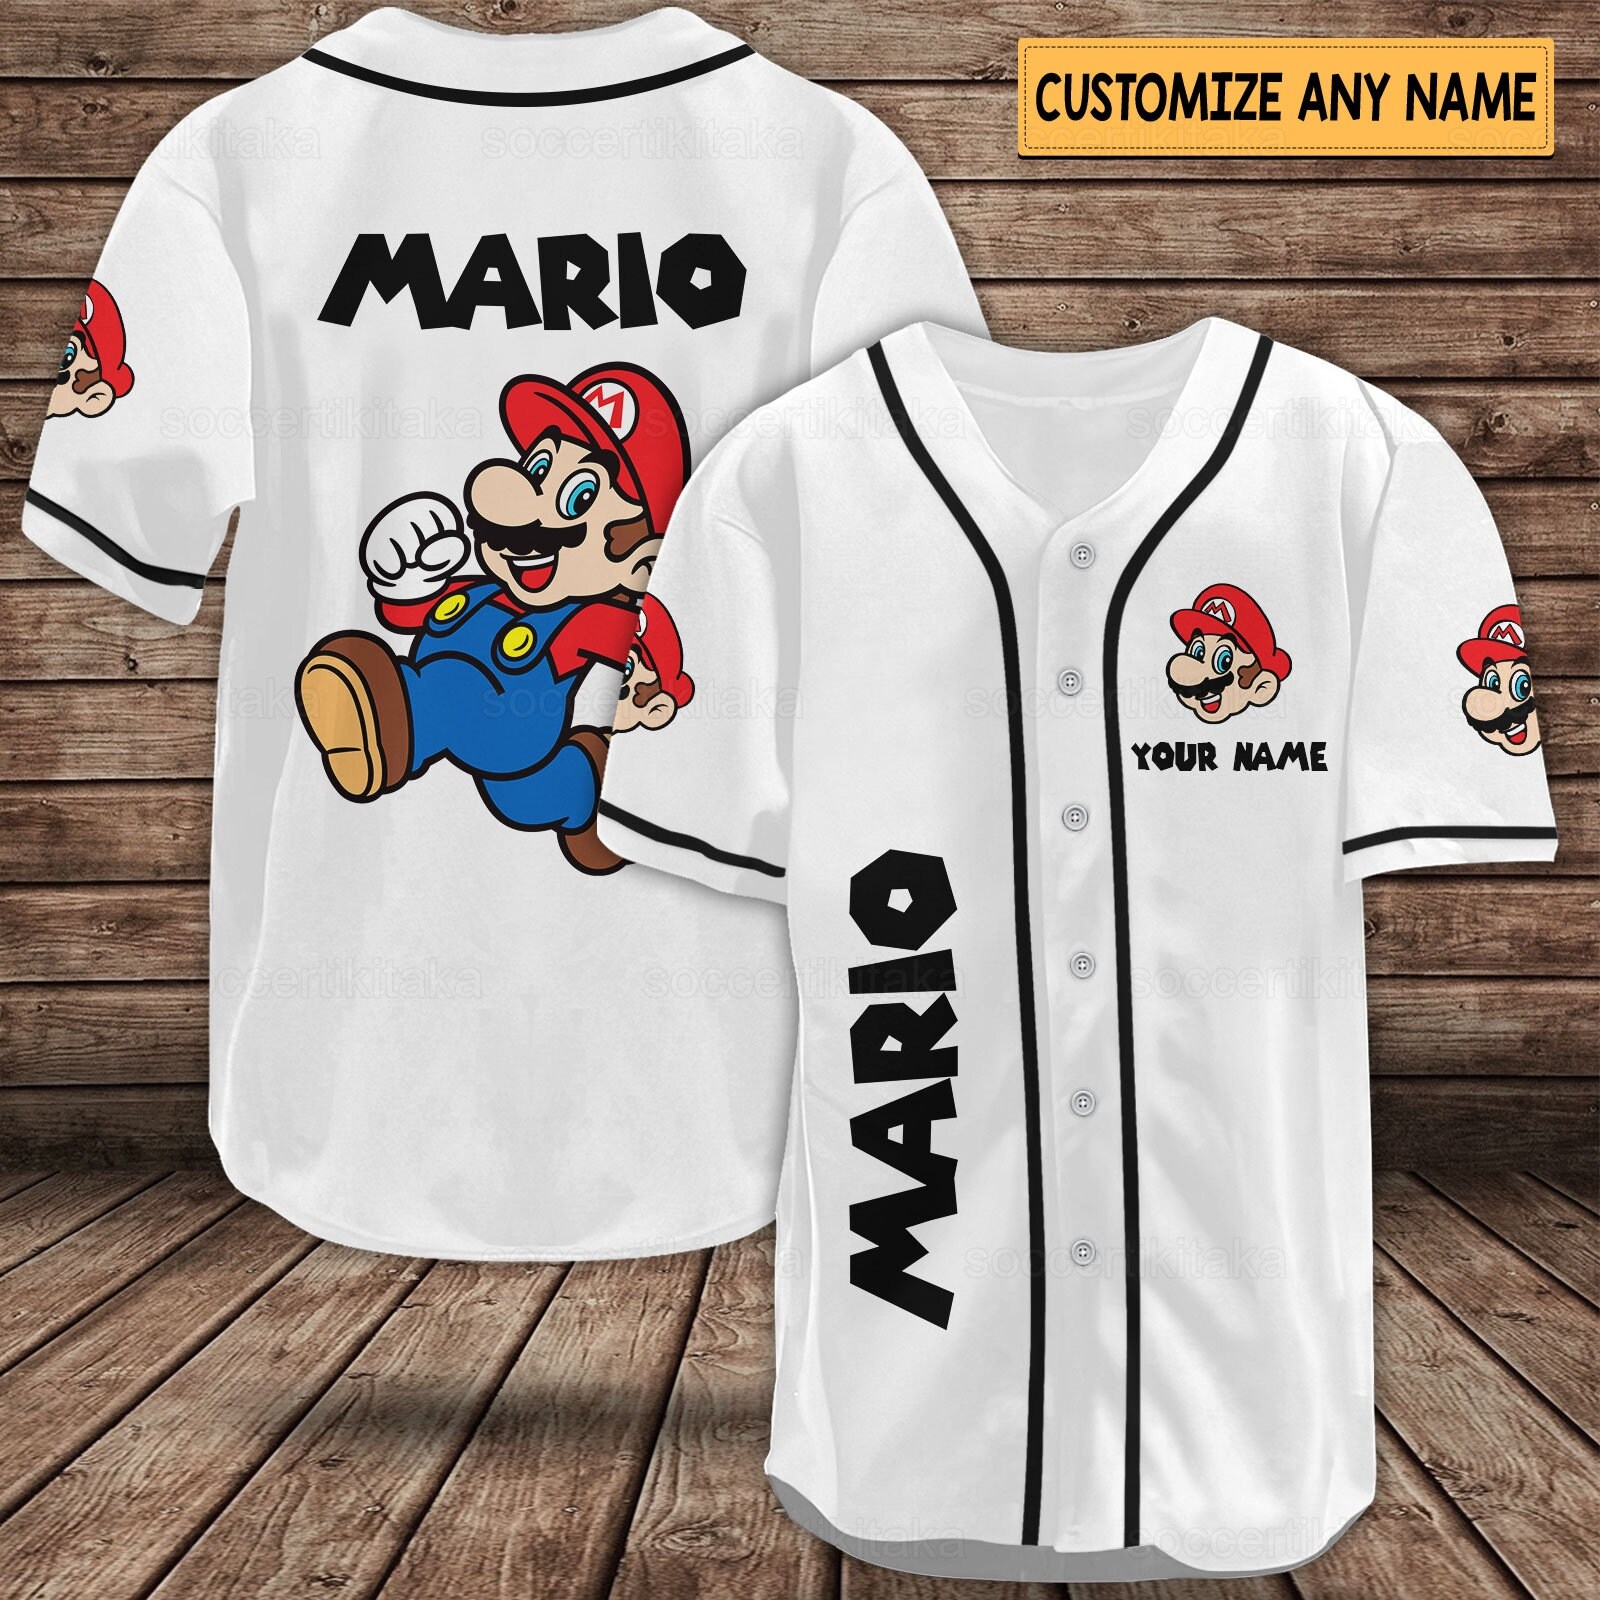 Super Mario Shirt, Super Mario Baseball Jersey, Personalized Mario Baseball Shirt